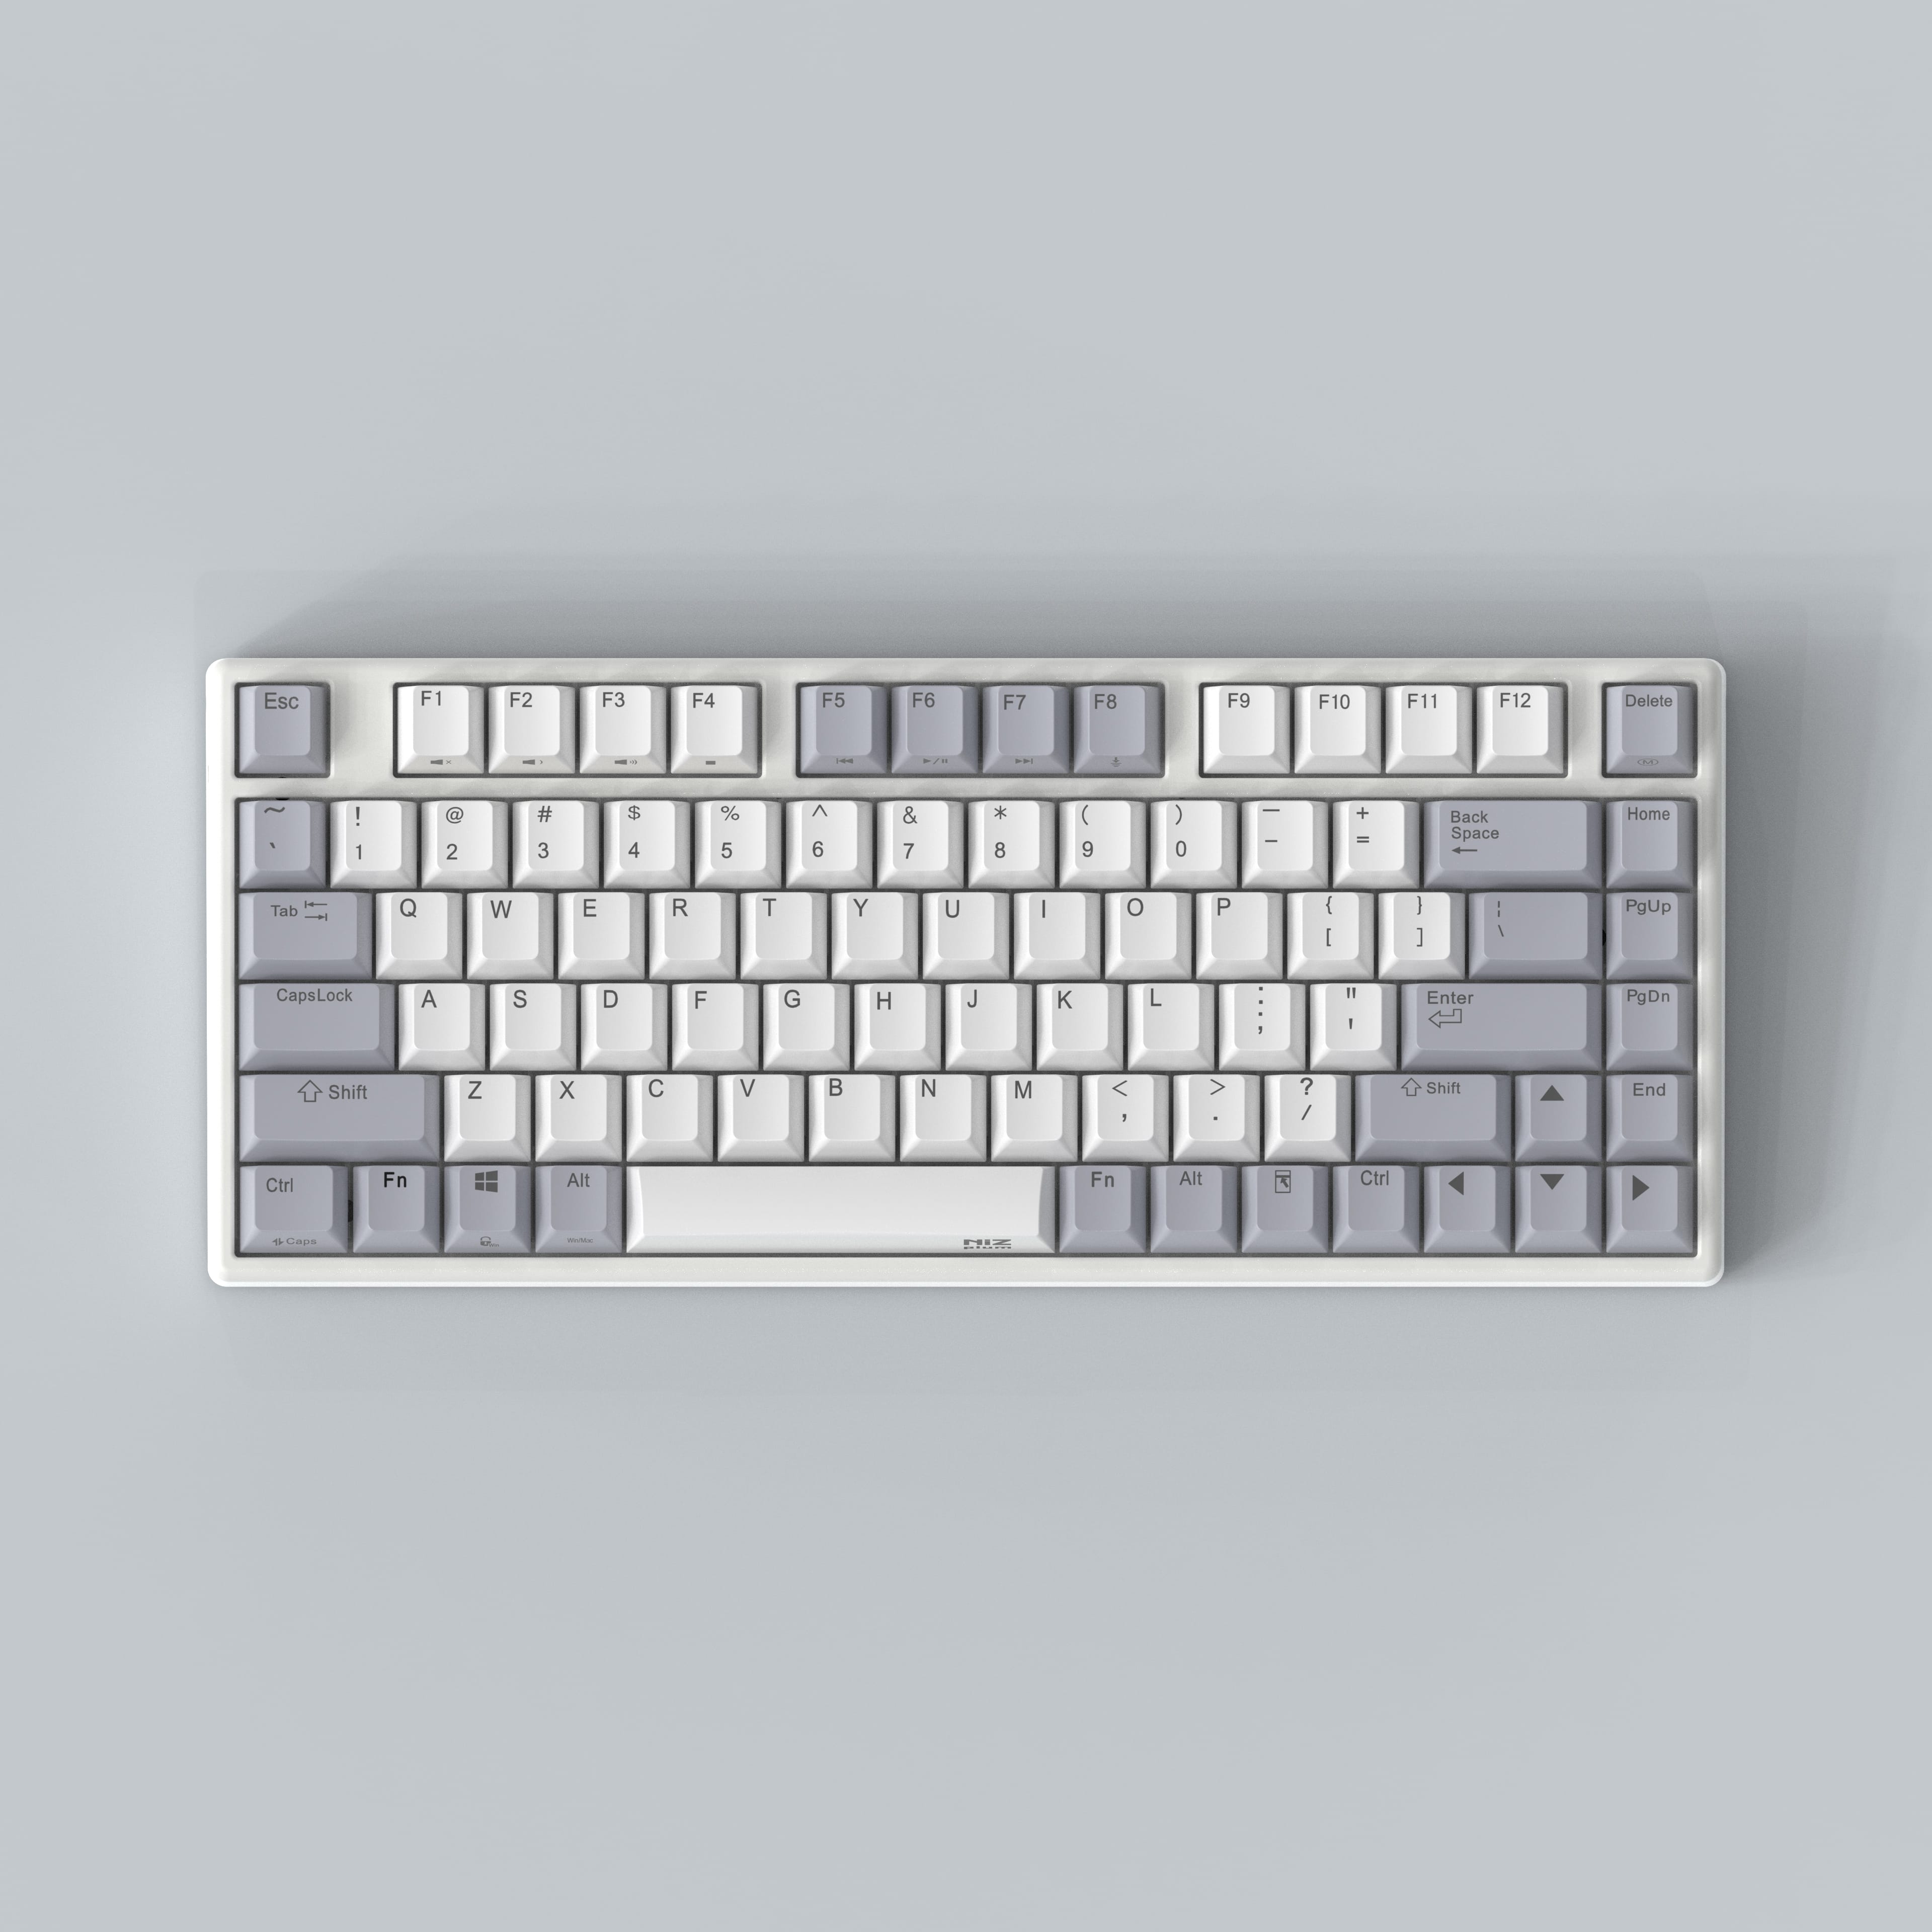 NIZ Keyboard MICRO 84 Capacitive Keyboard